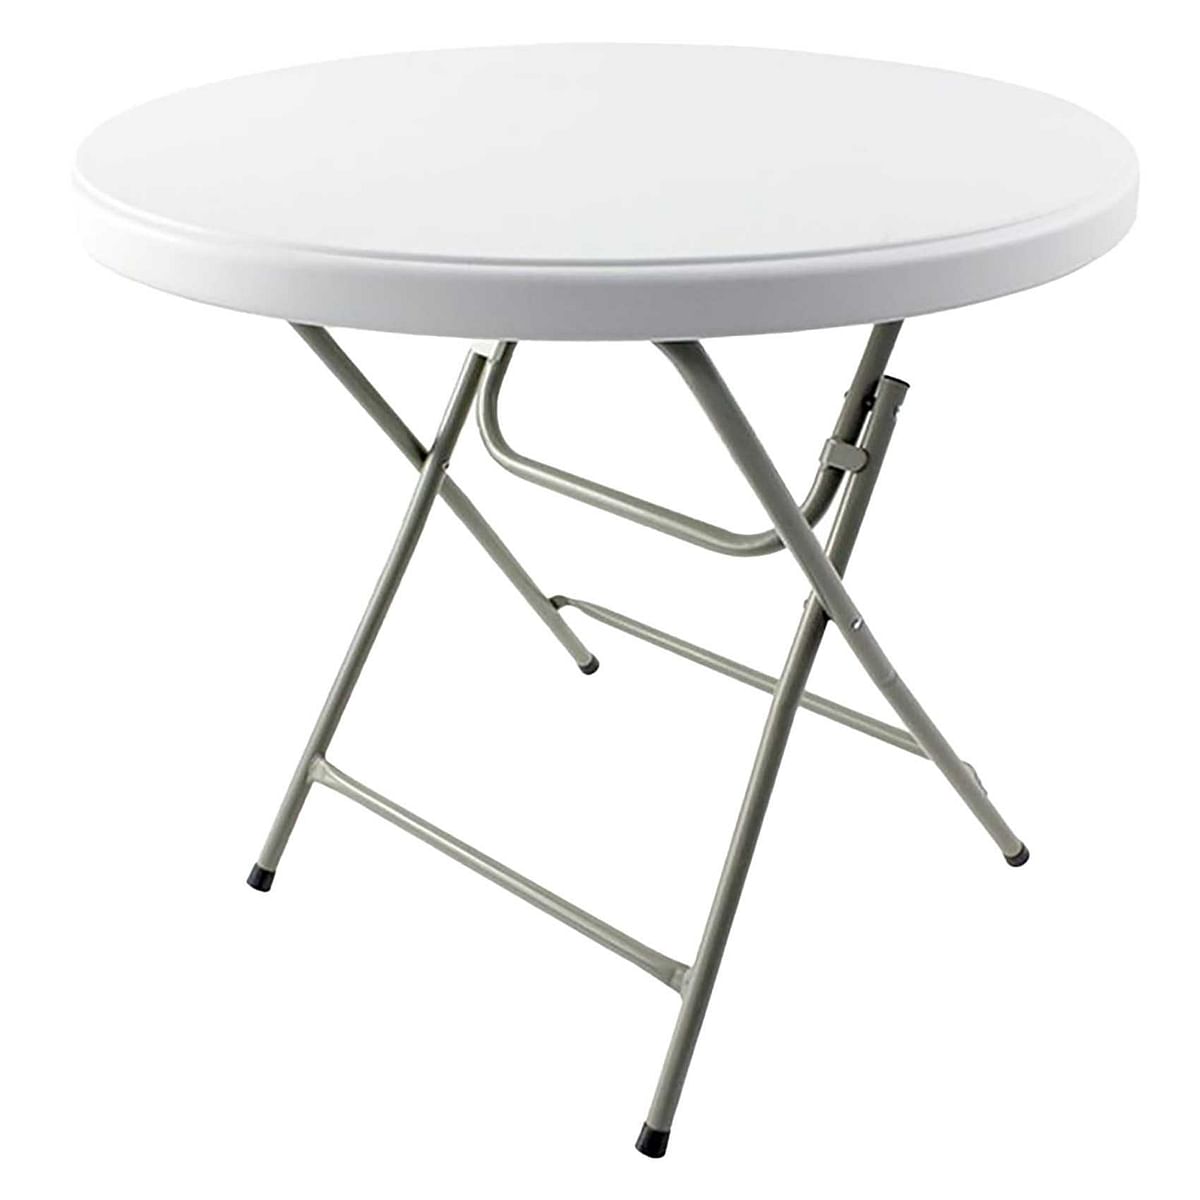 Round Foldable Table Item No. 87807 HS-02 Size 81x6x106.5cm -White